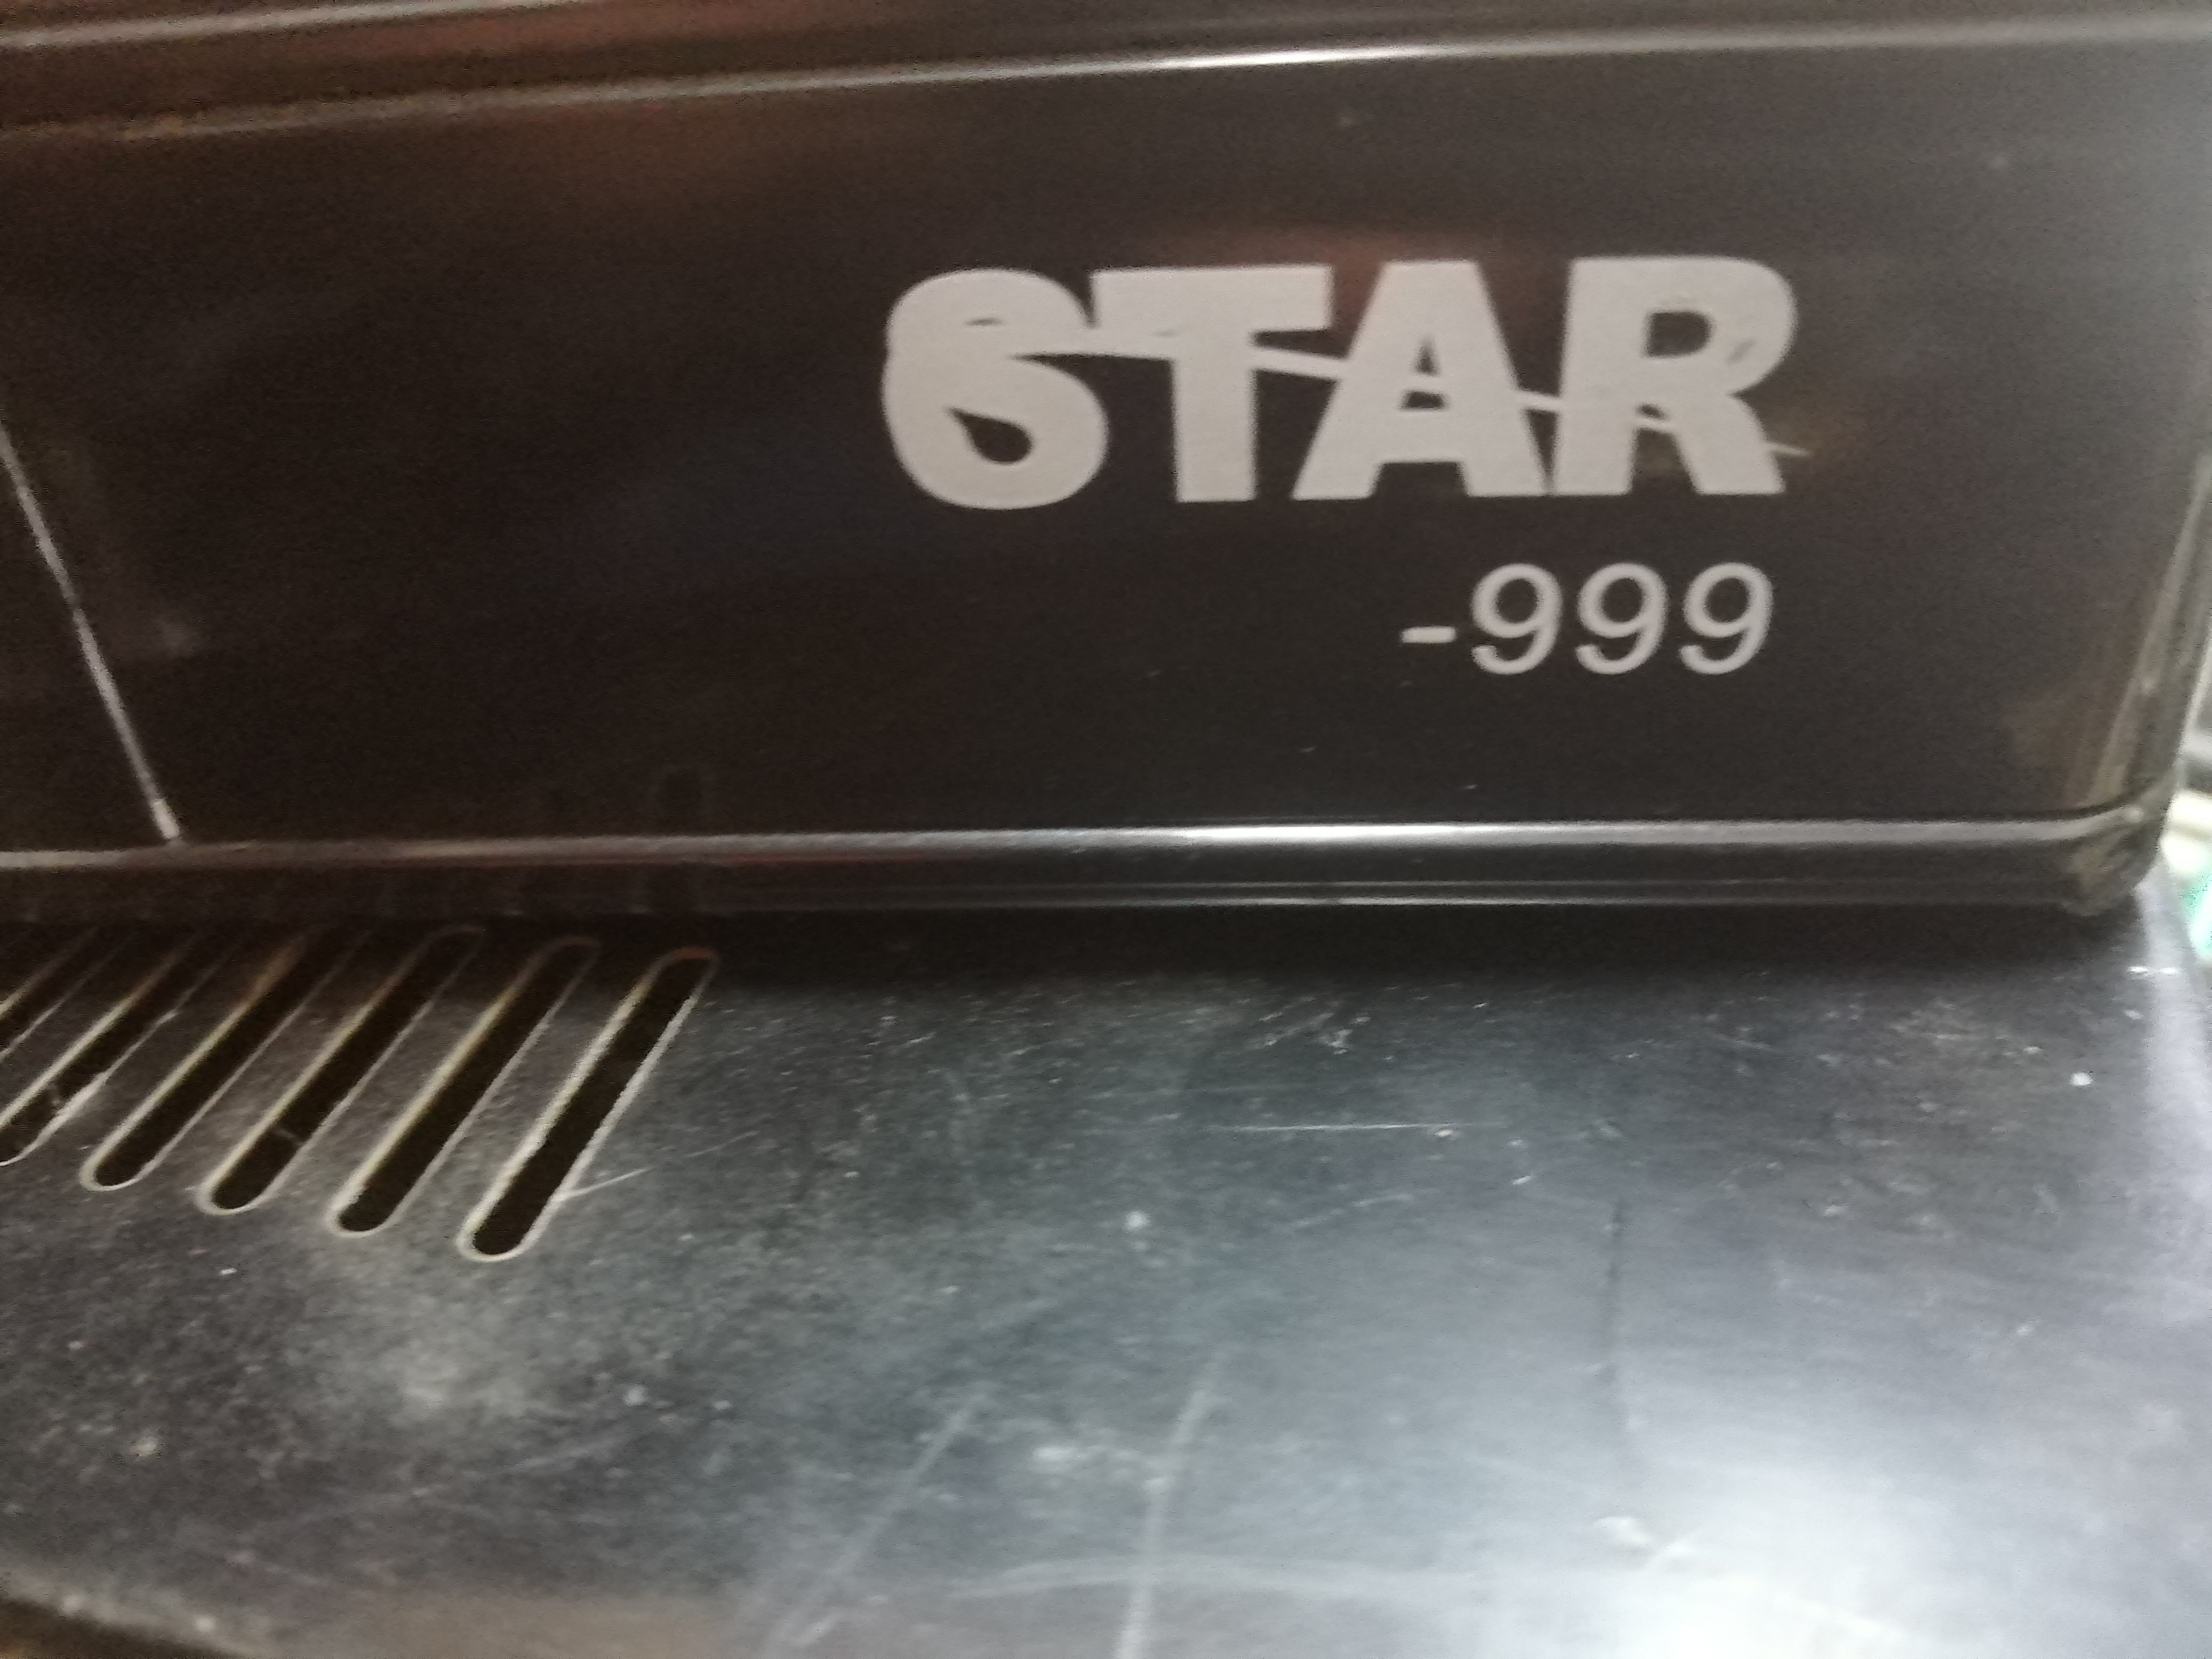 STAR-999 dump 5.jpg